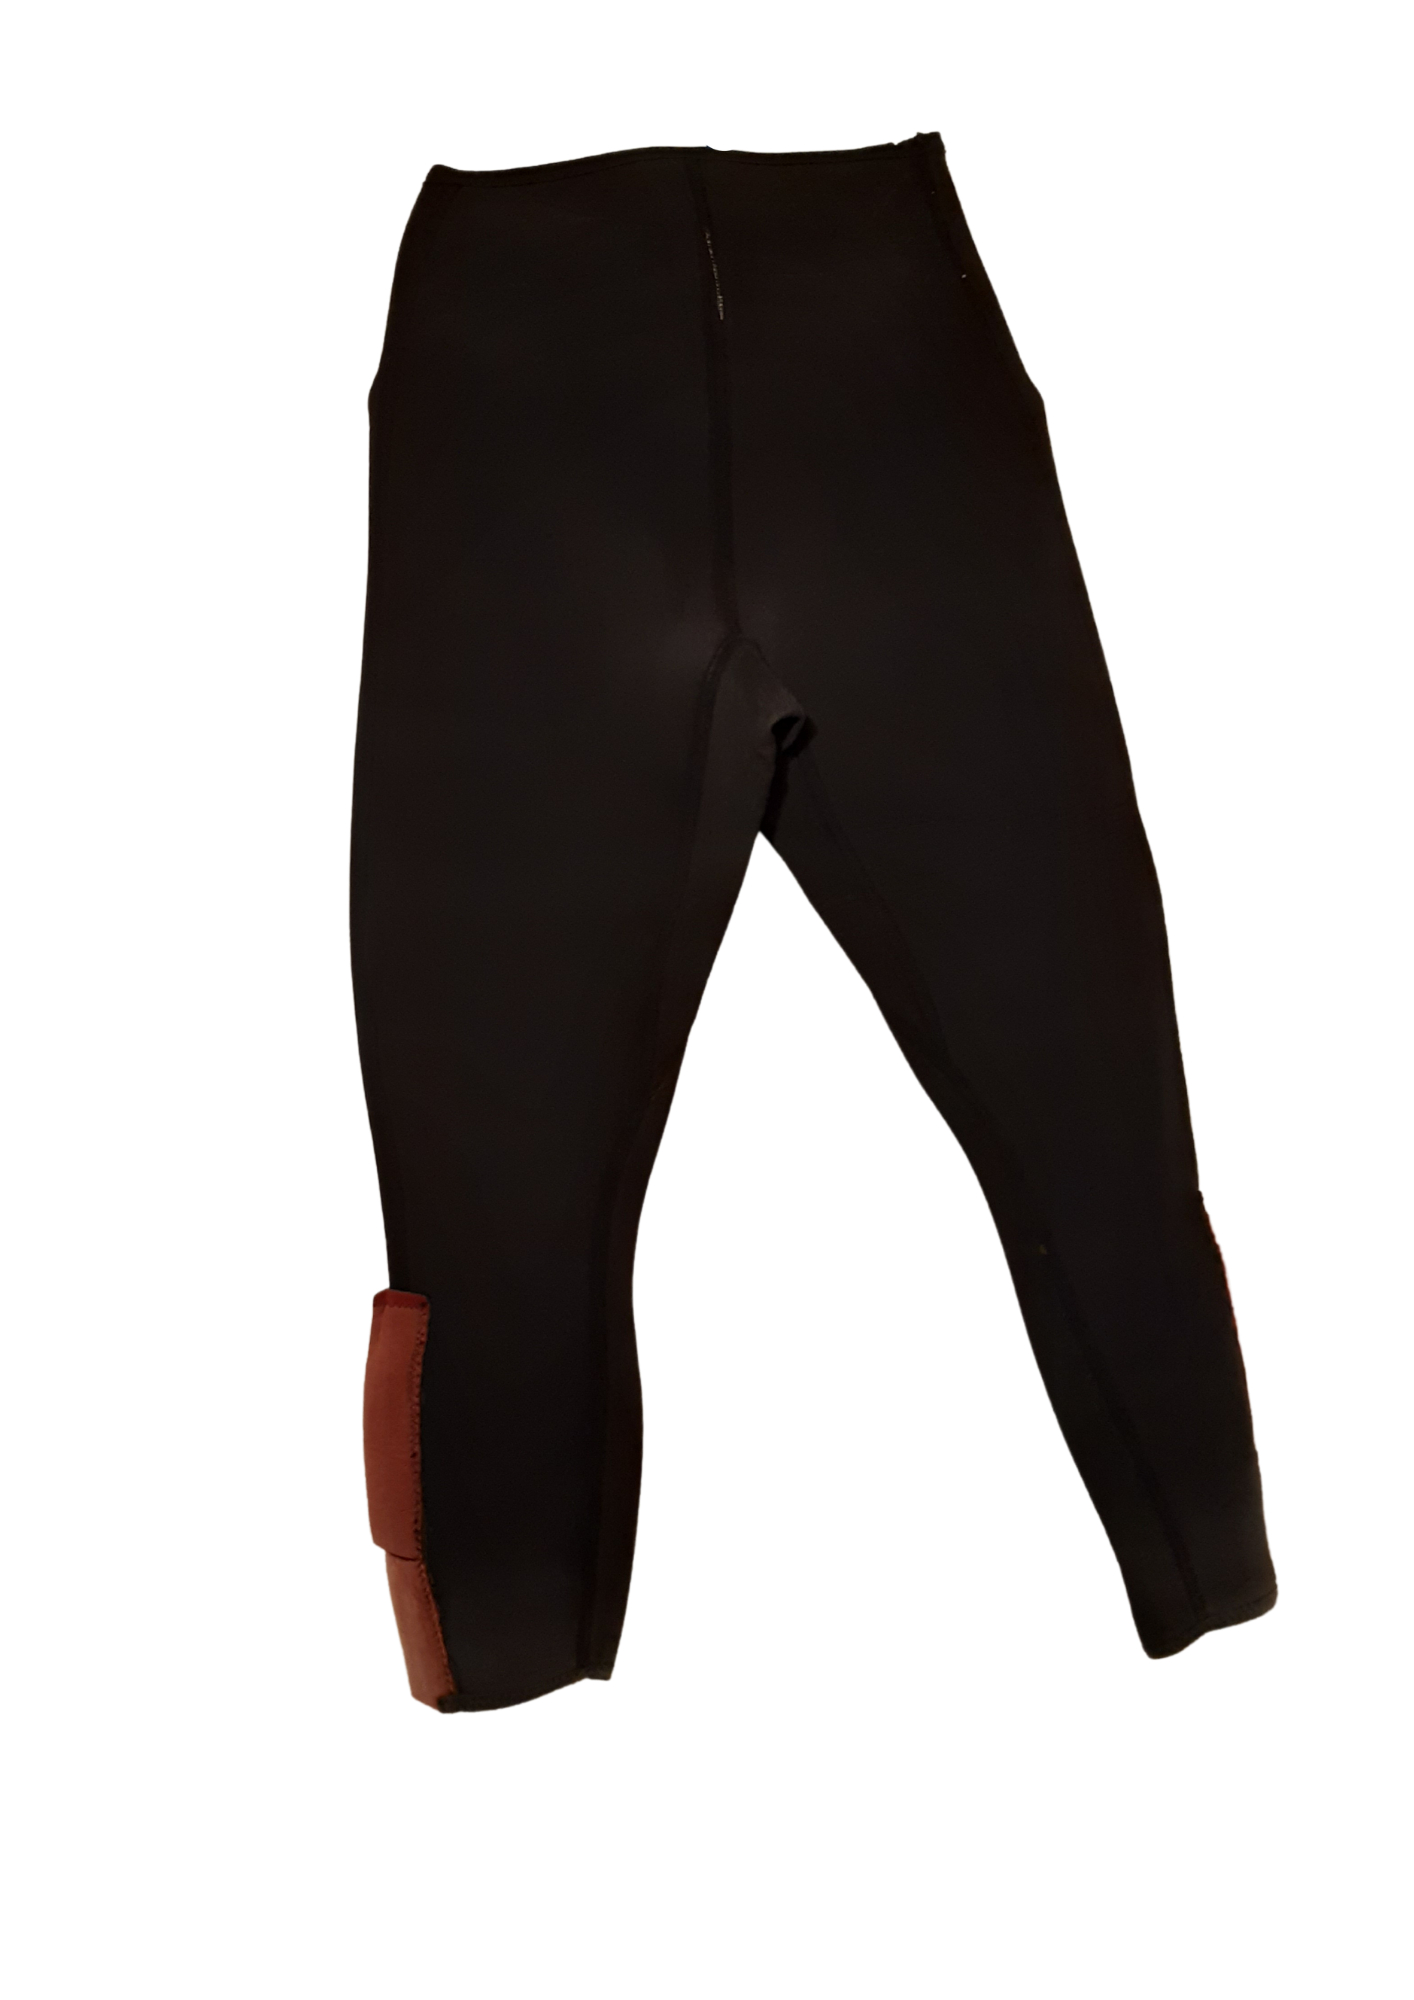 Banzai Sport 38 2pc wetsuit - Size Medium/Short